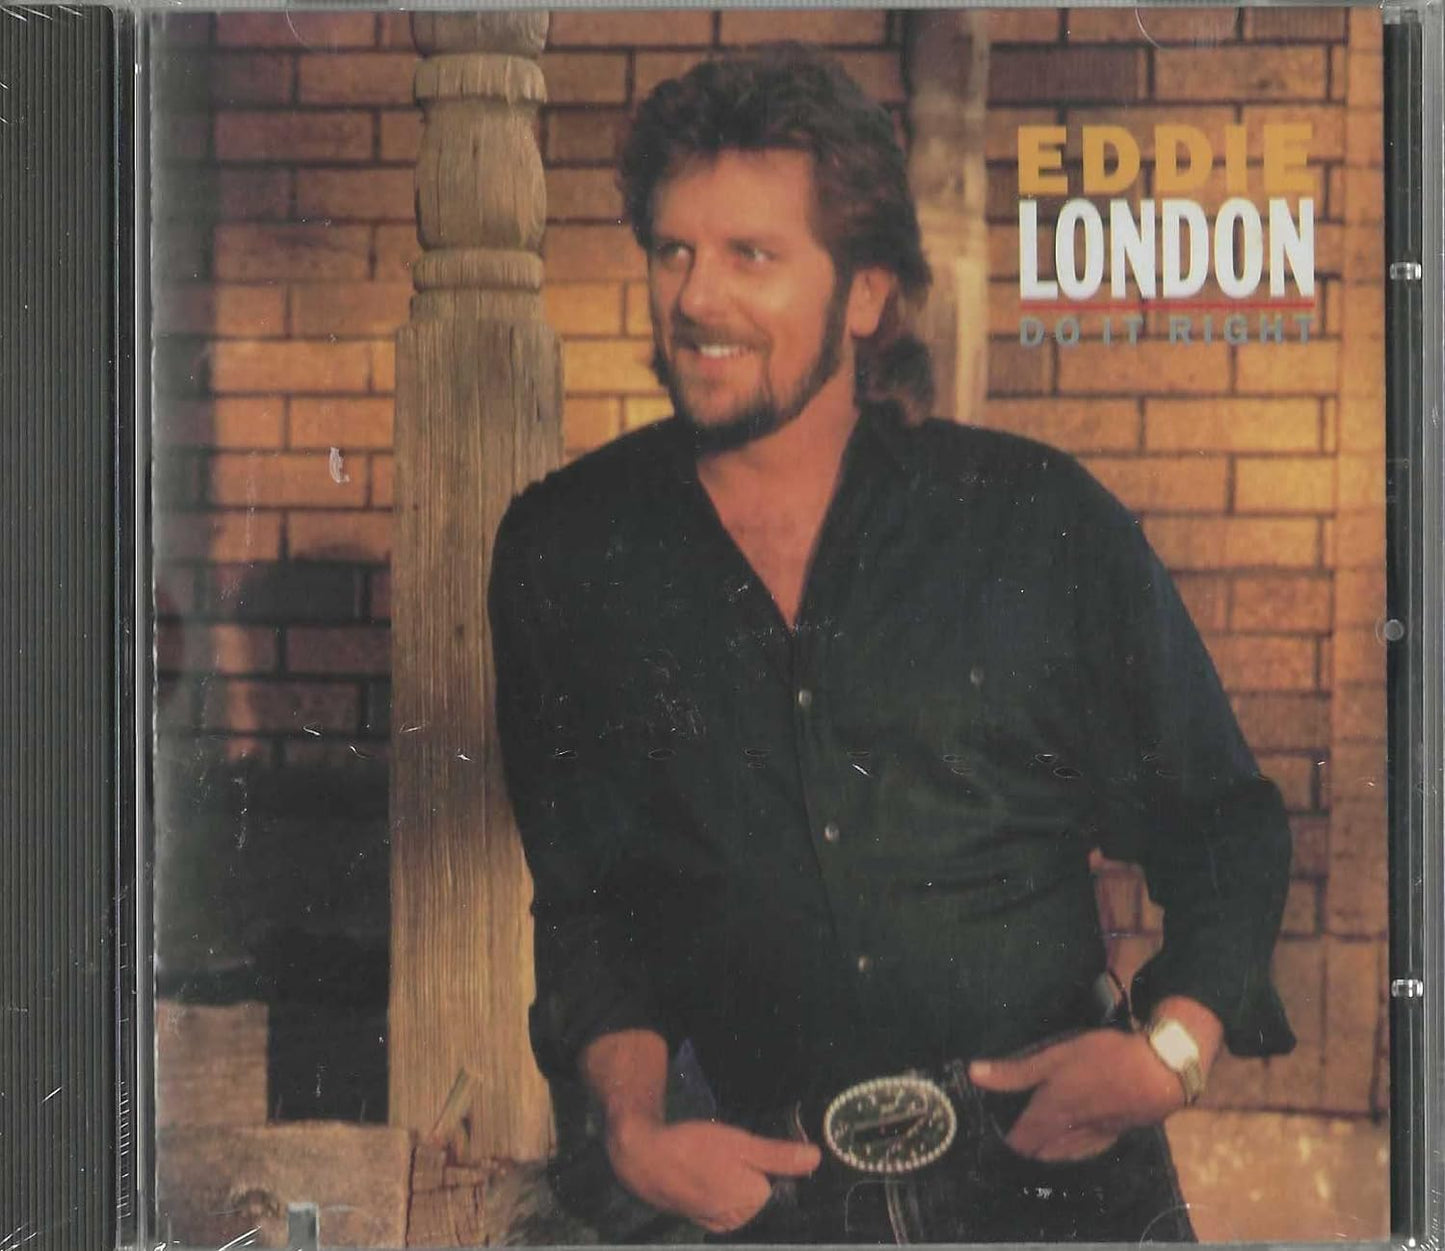 Do It Right [Audio CD] Eddie London